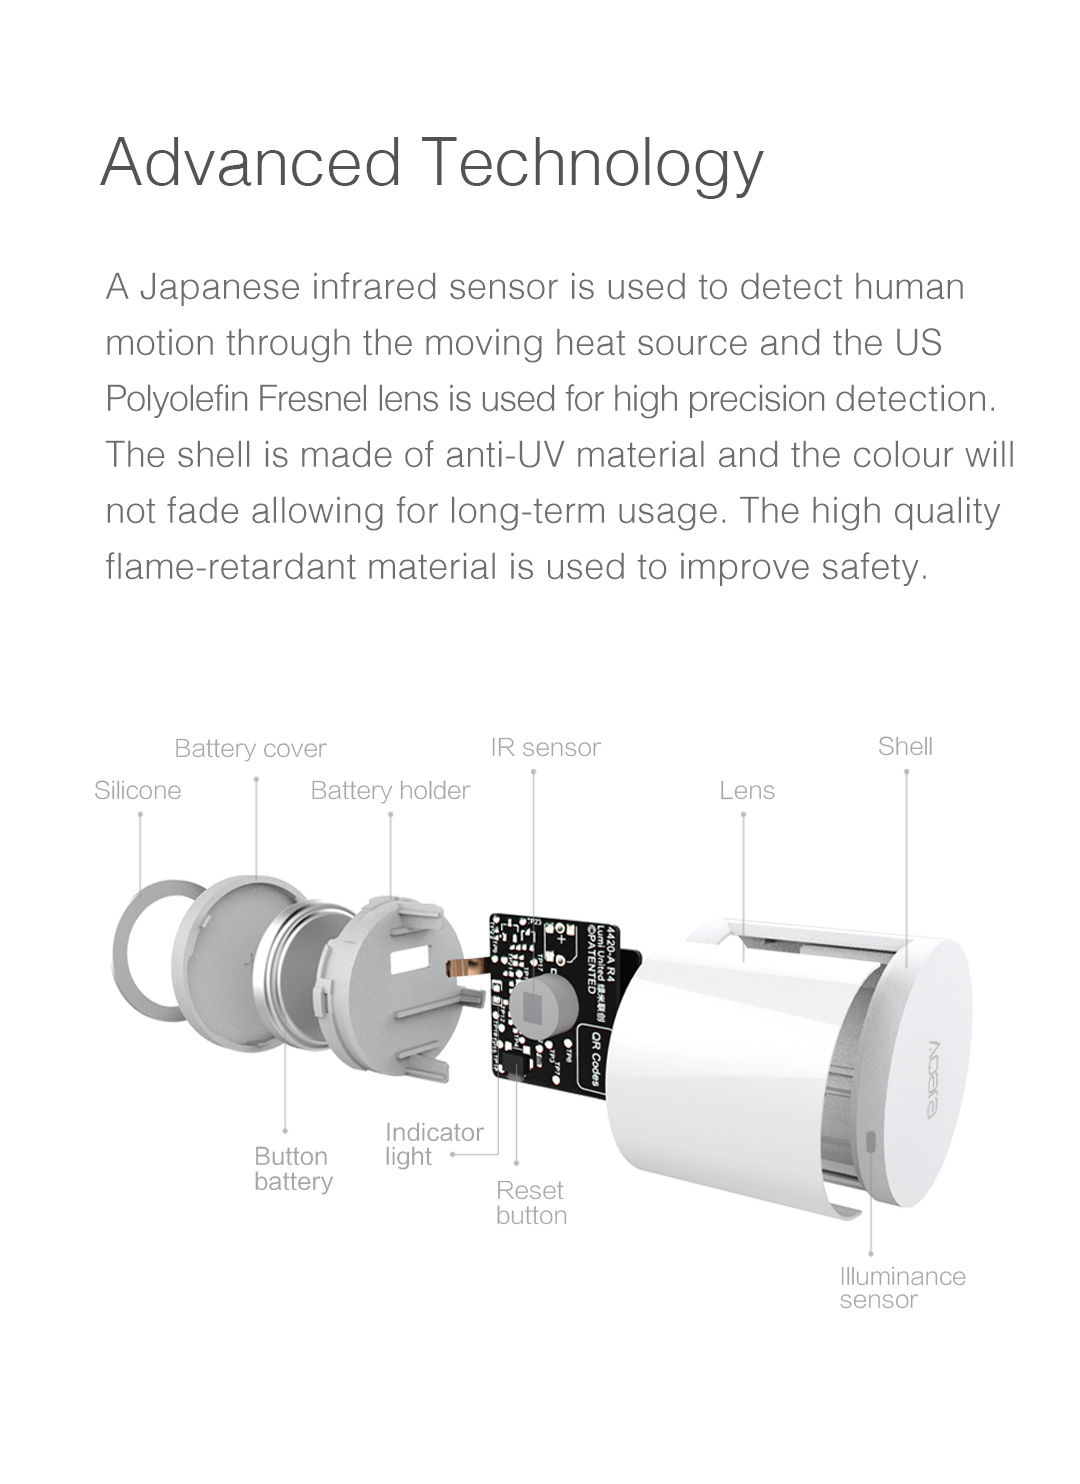 Aqara human body sensor uses a Japanese infrared sensor to detect human motion